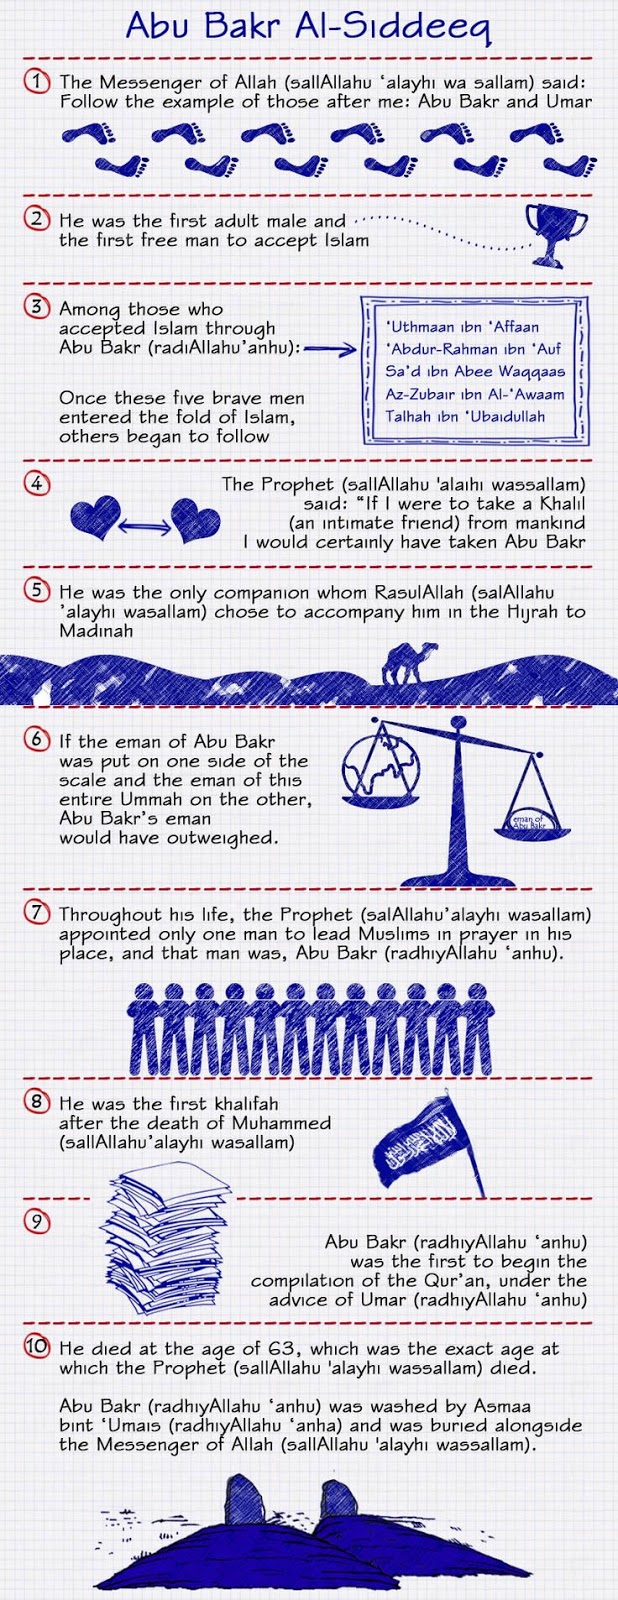 Abu Bakr infographic